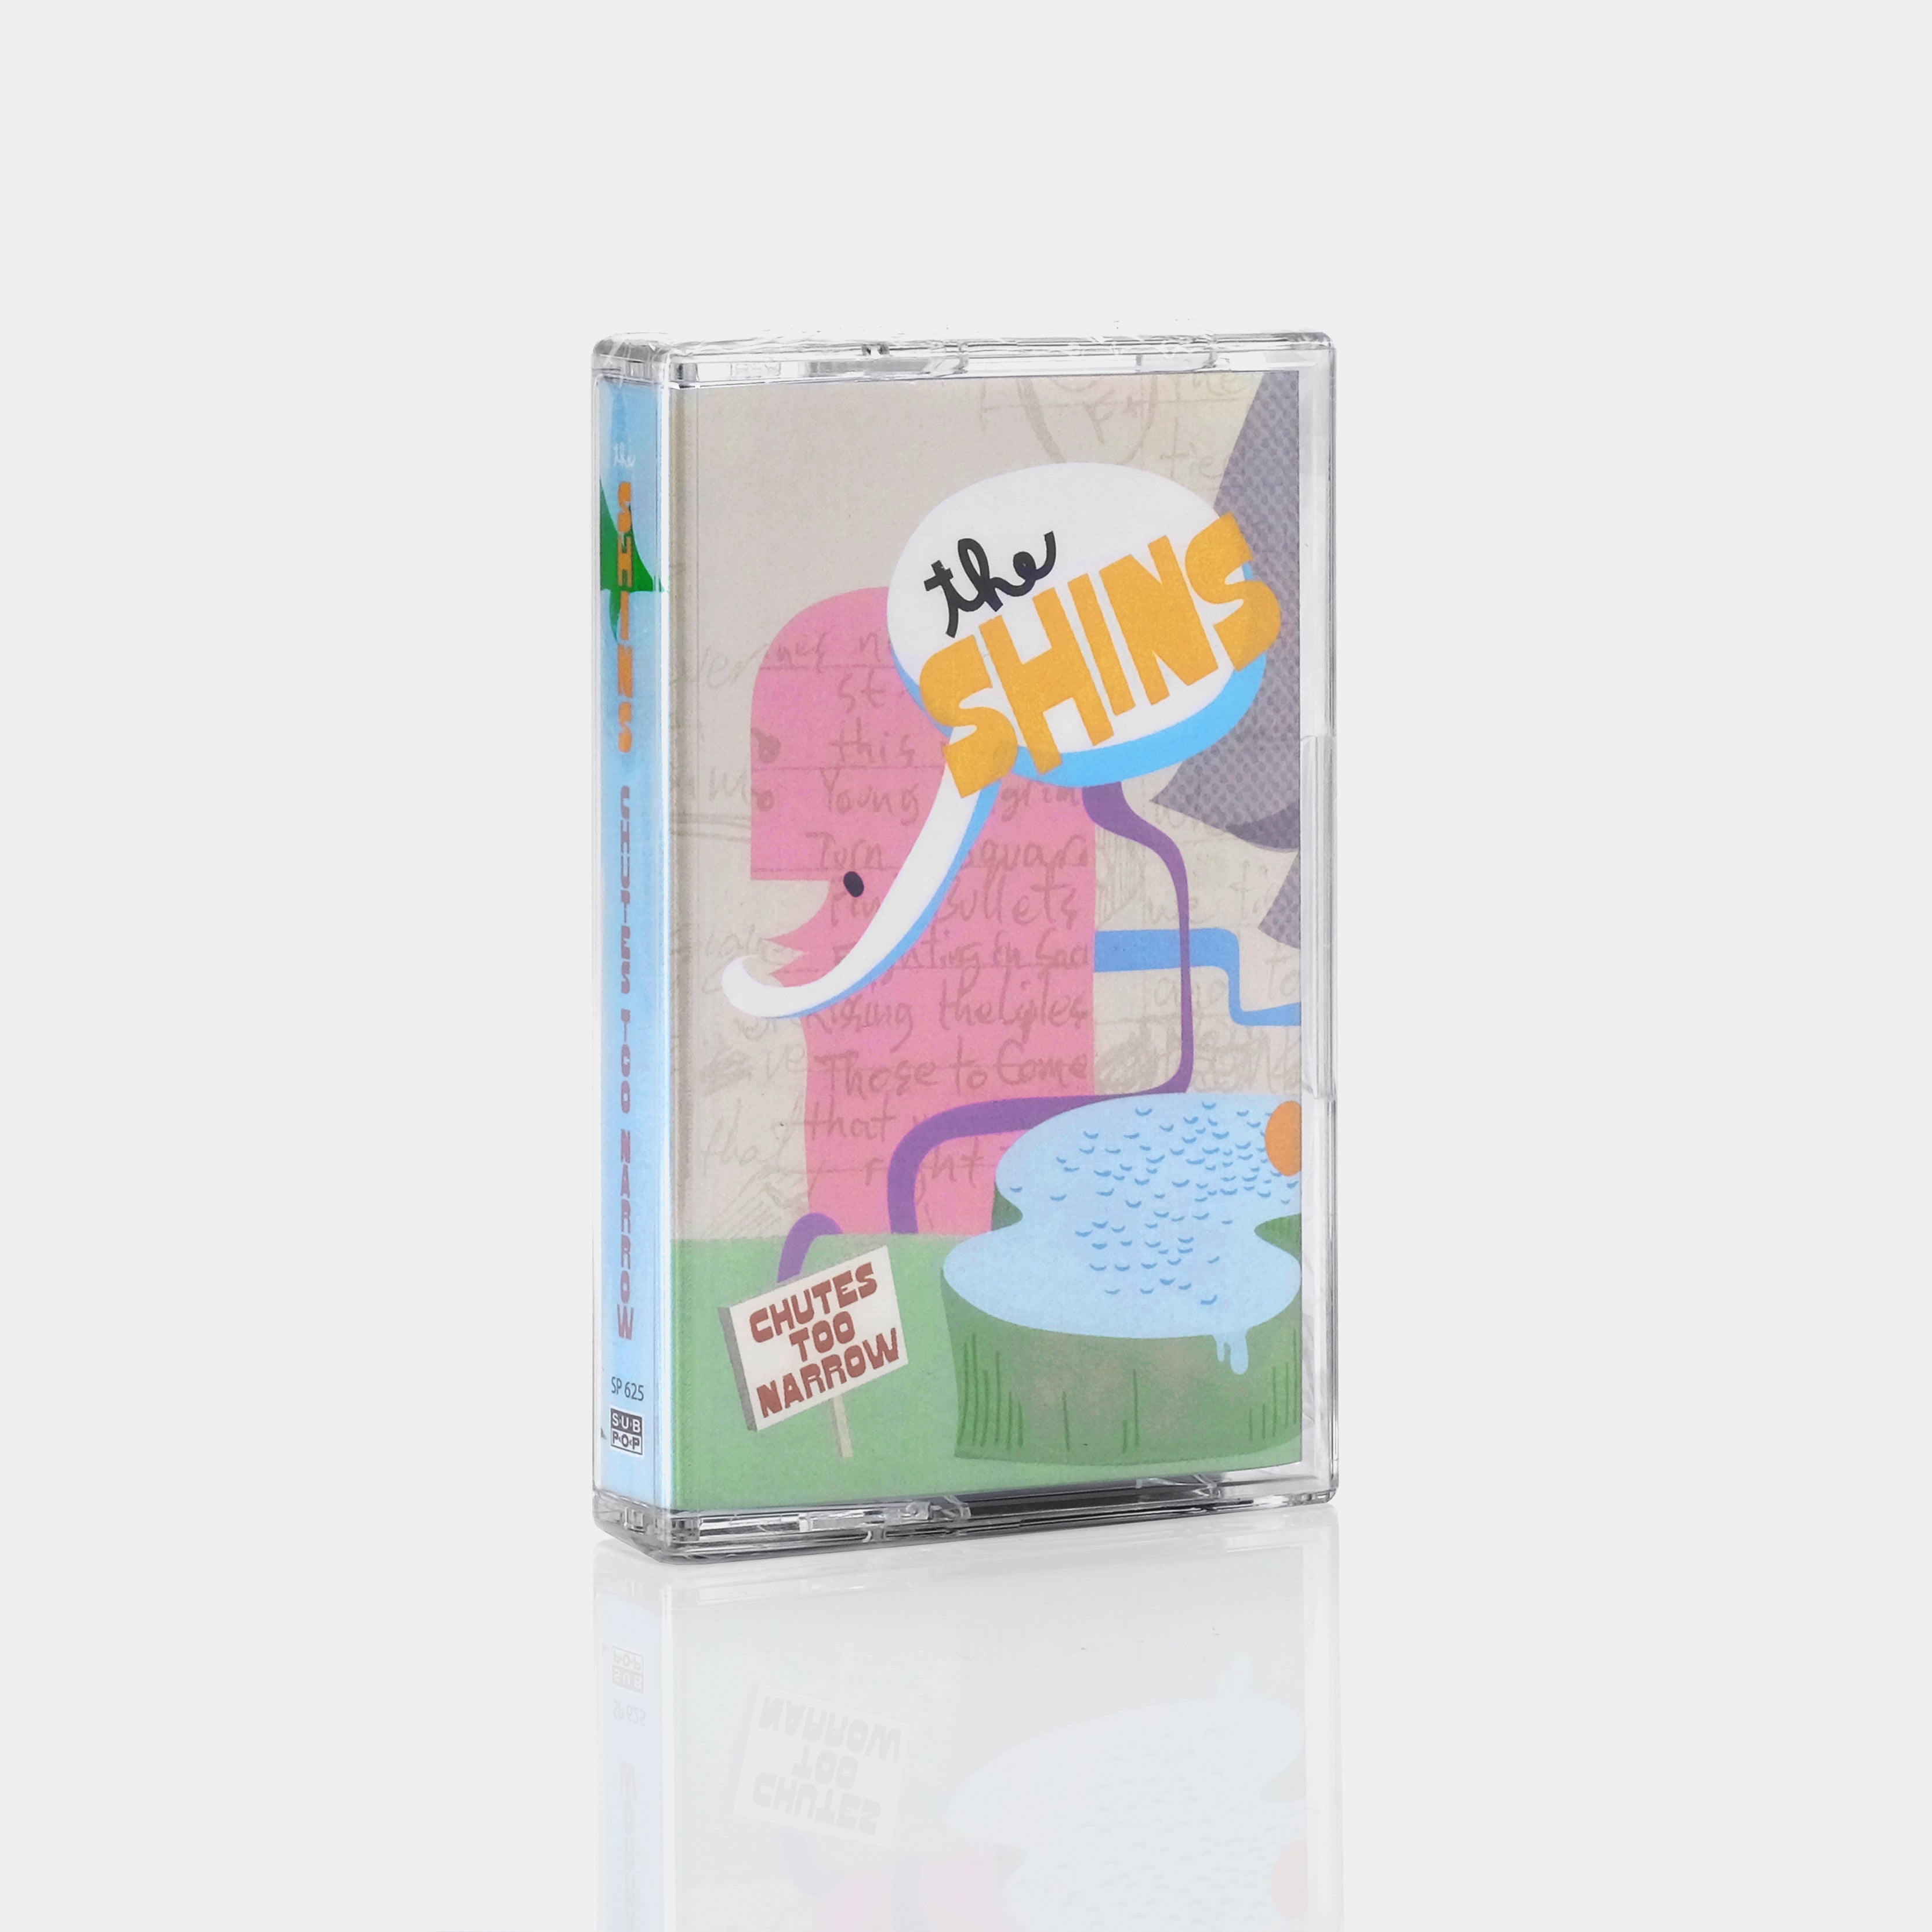 The Shins - Chutes Too Narrow Cassette Tape